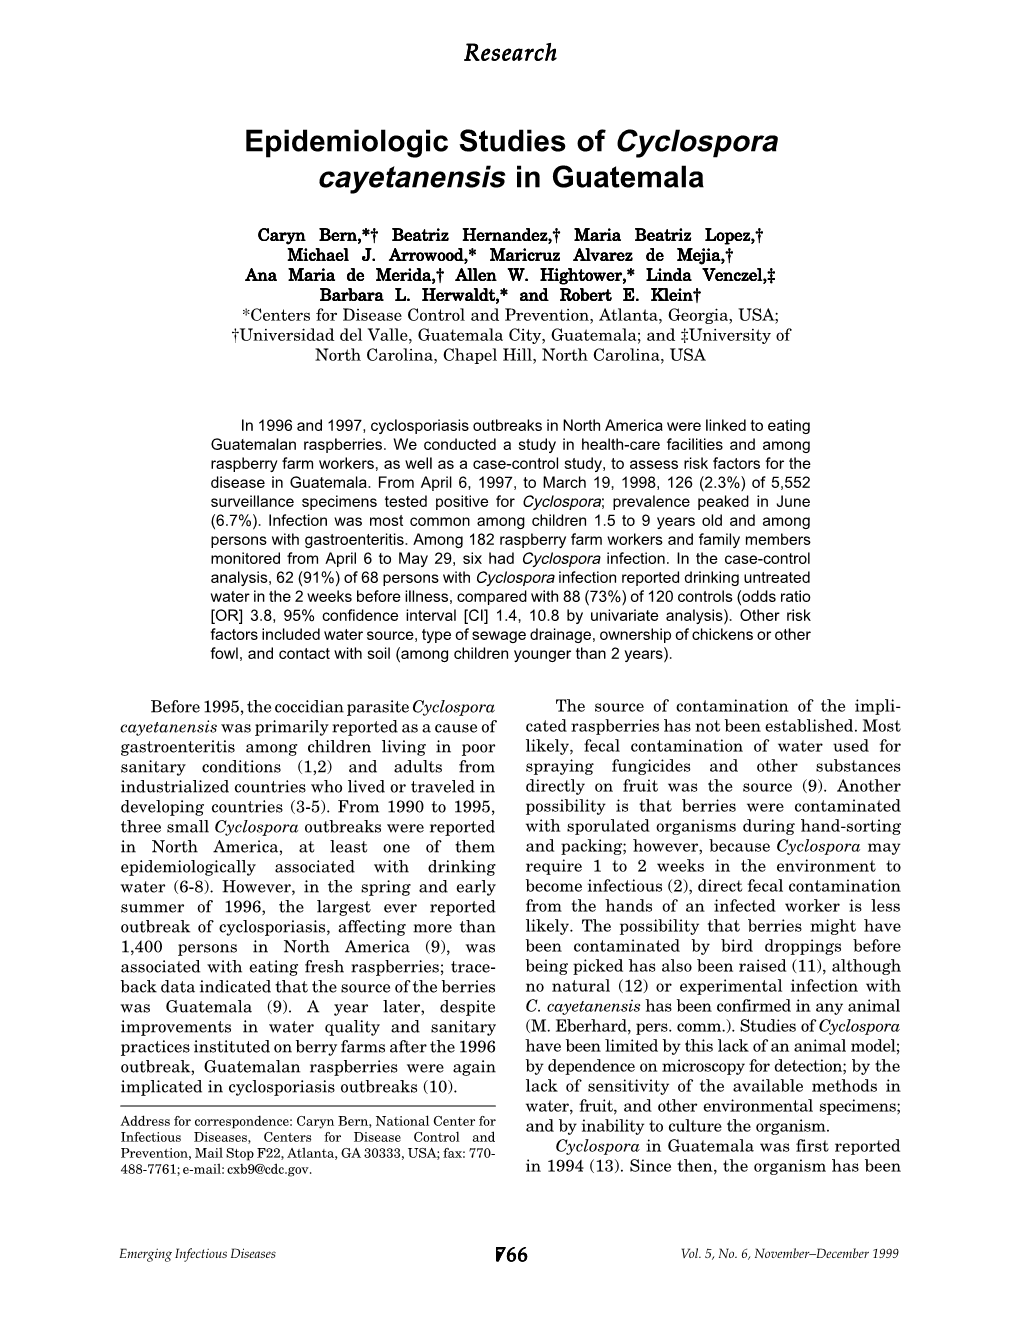 Epidemiologic Studies of Cyclospora Cayetanensis in Guatemala